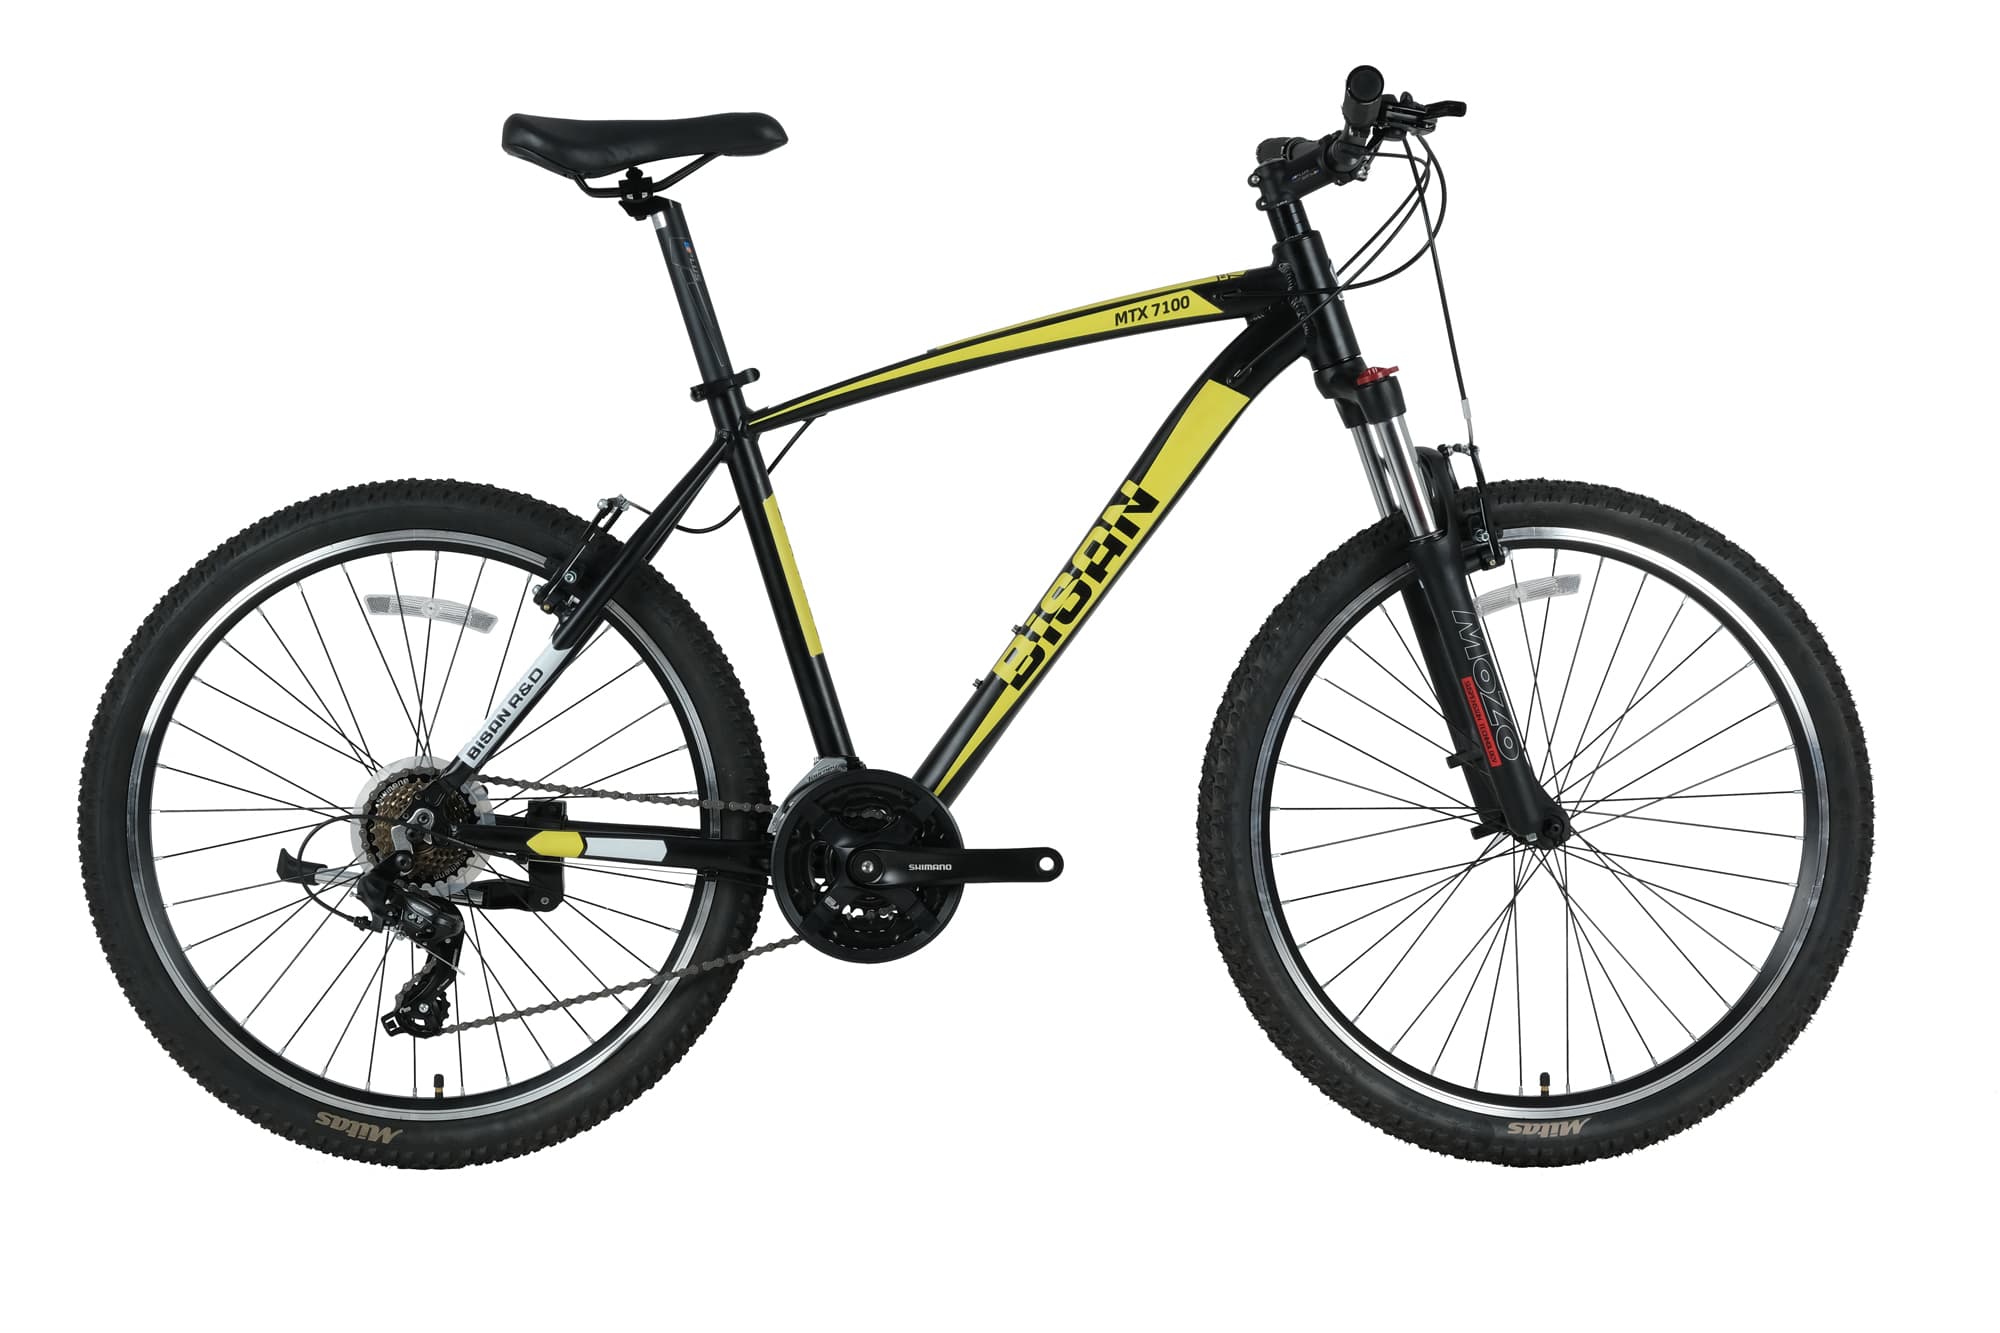 Bisan MTX 7100 27.5 Jant Dağ Bisikleti Mat Siyah-Sarı 48 cm